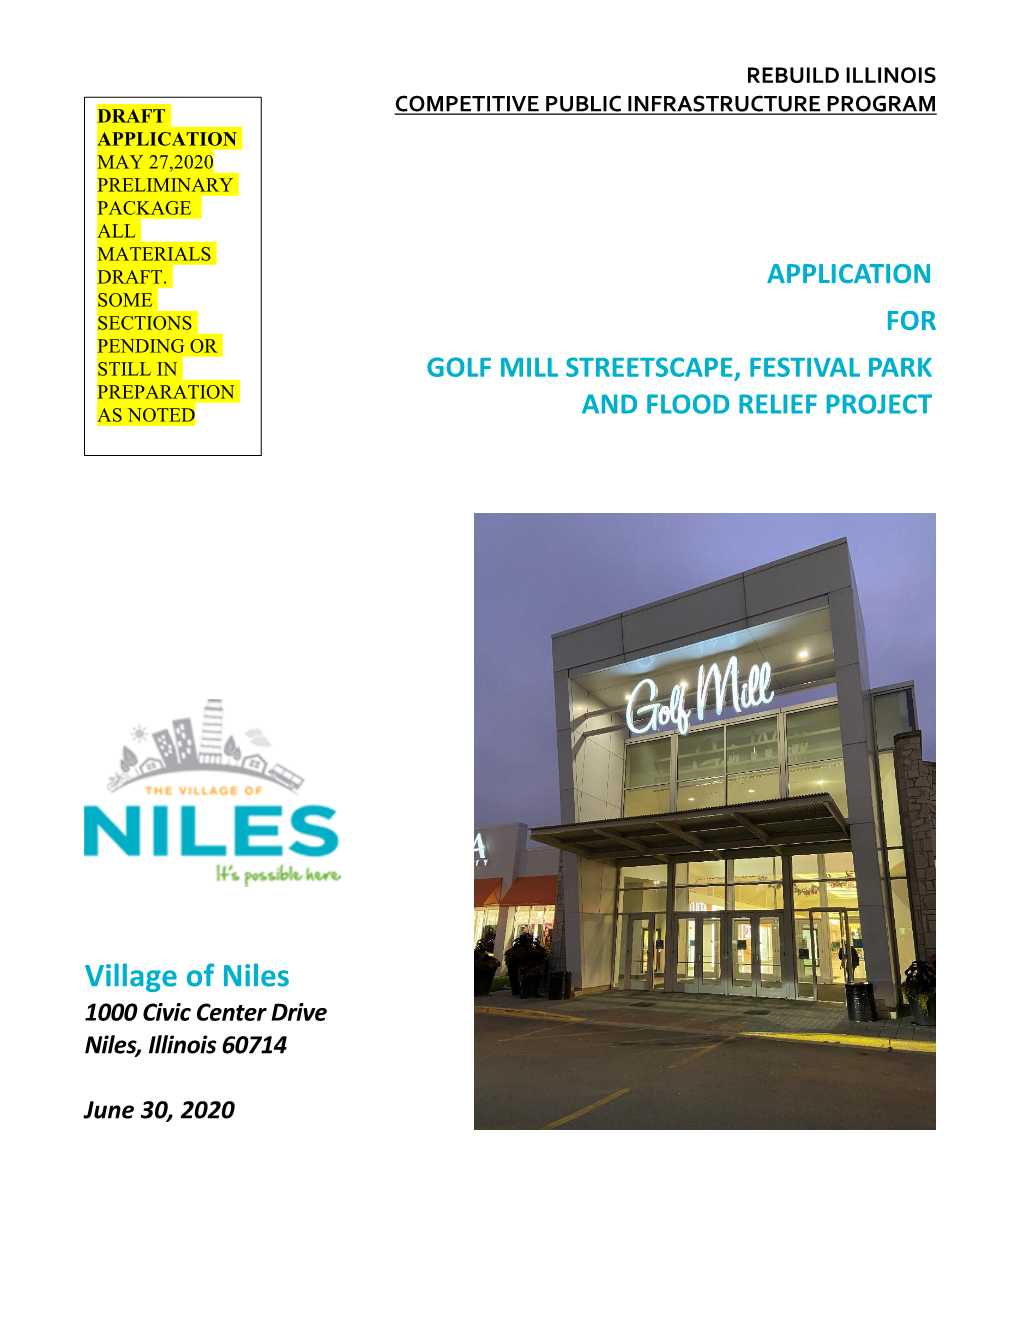 Village of Niles 2020 Rebuild Illinois Public Infrastructure